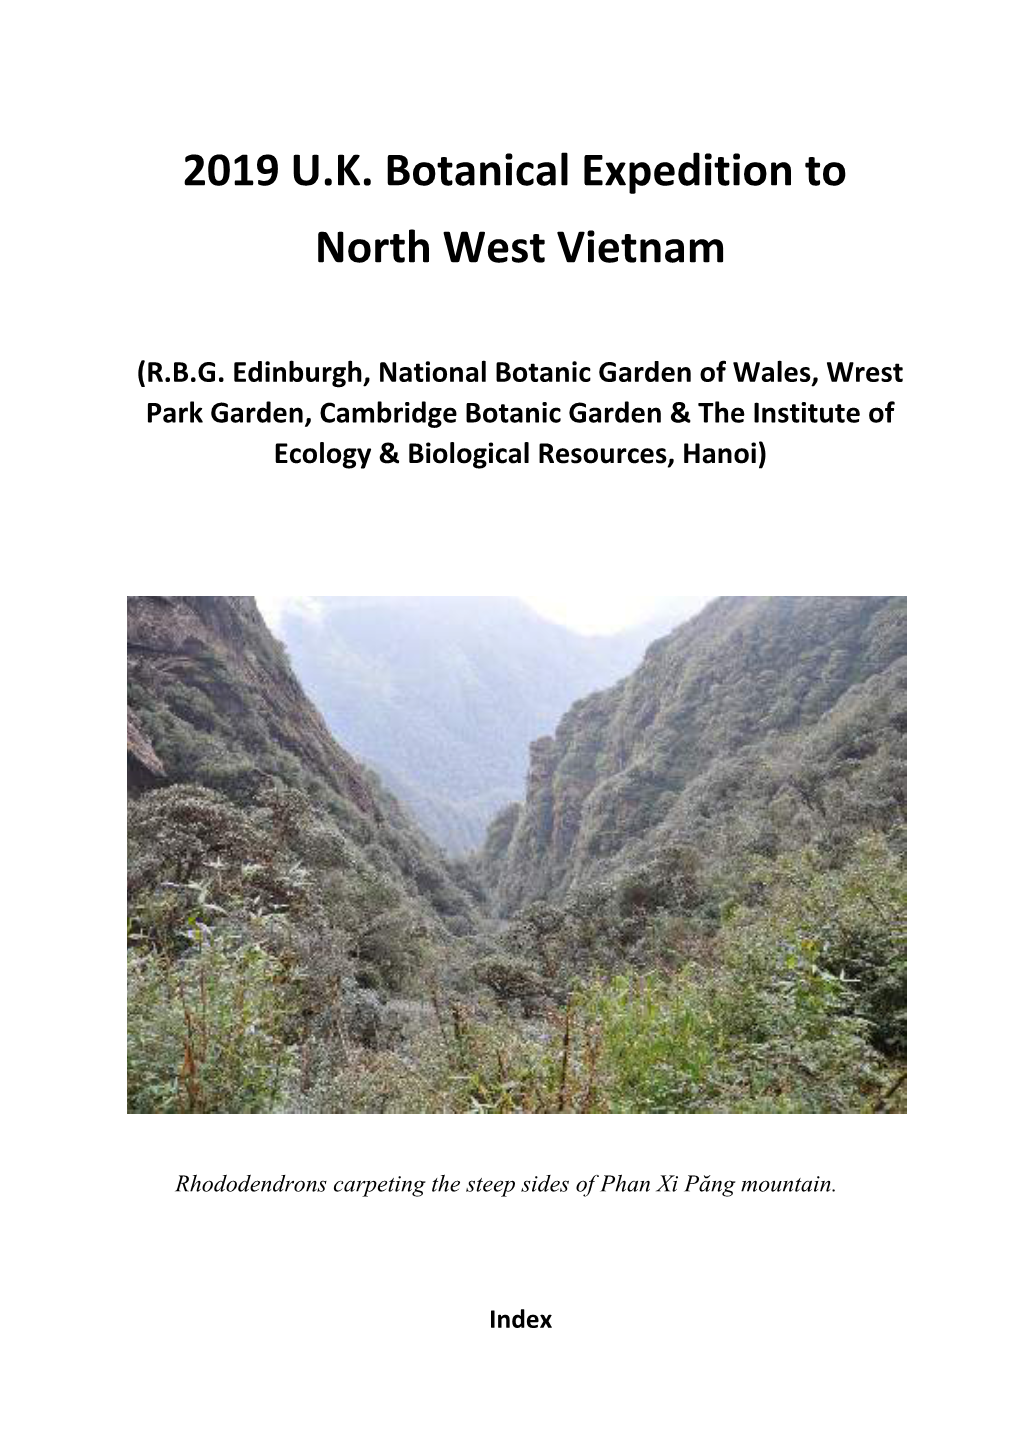 2019 U.K. Botanical Expedition to North West Vietnam